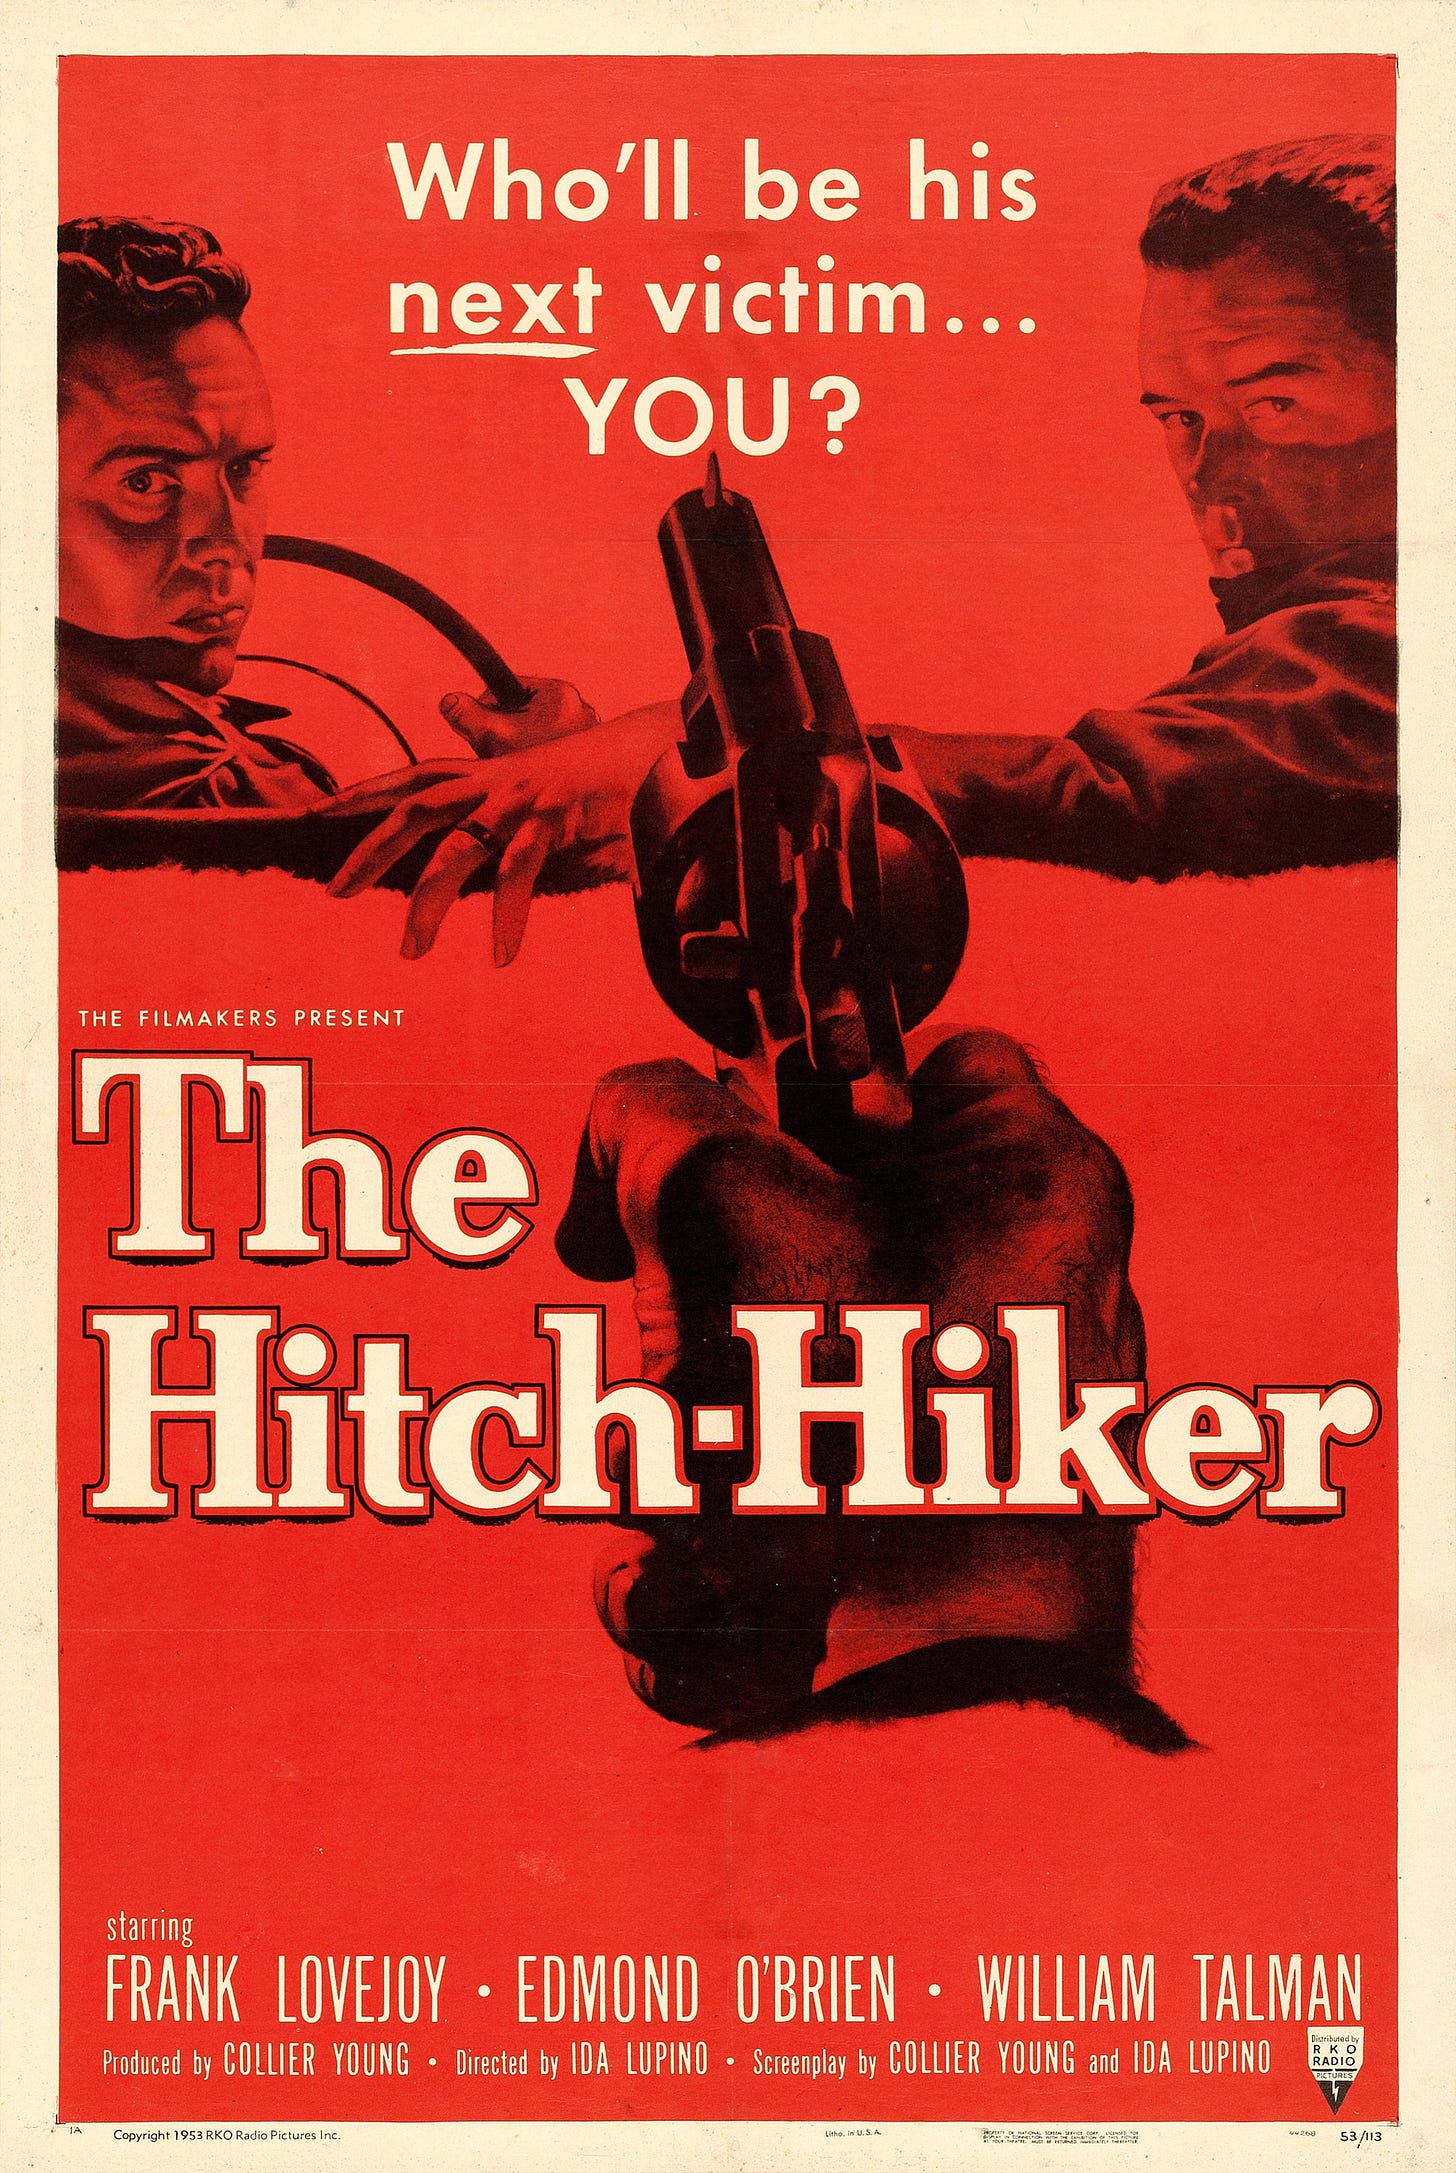 The Hitch-Hiker - Wikipedia